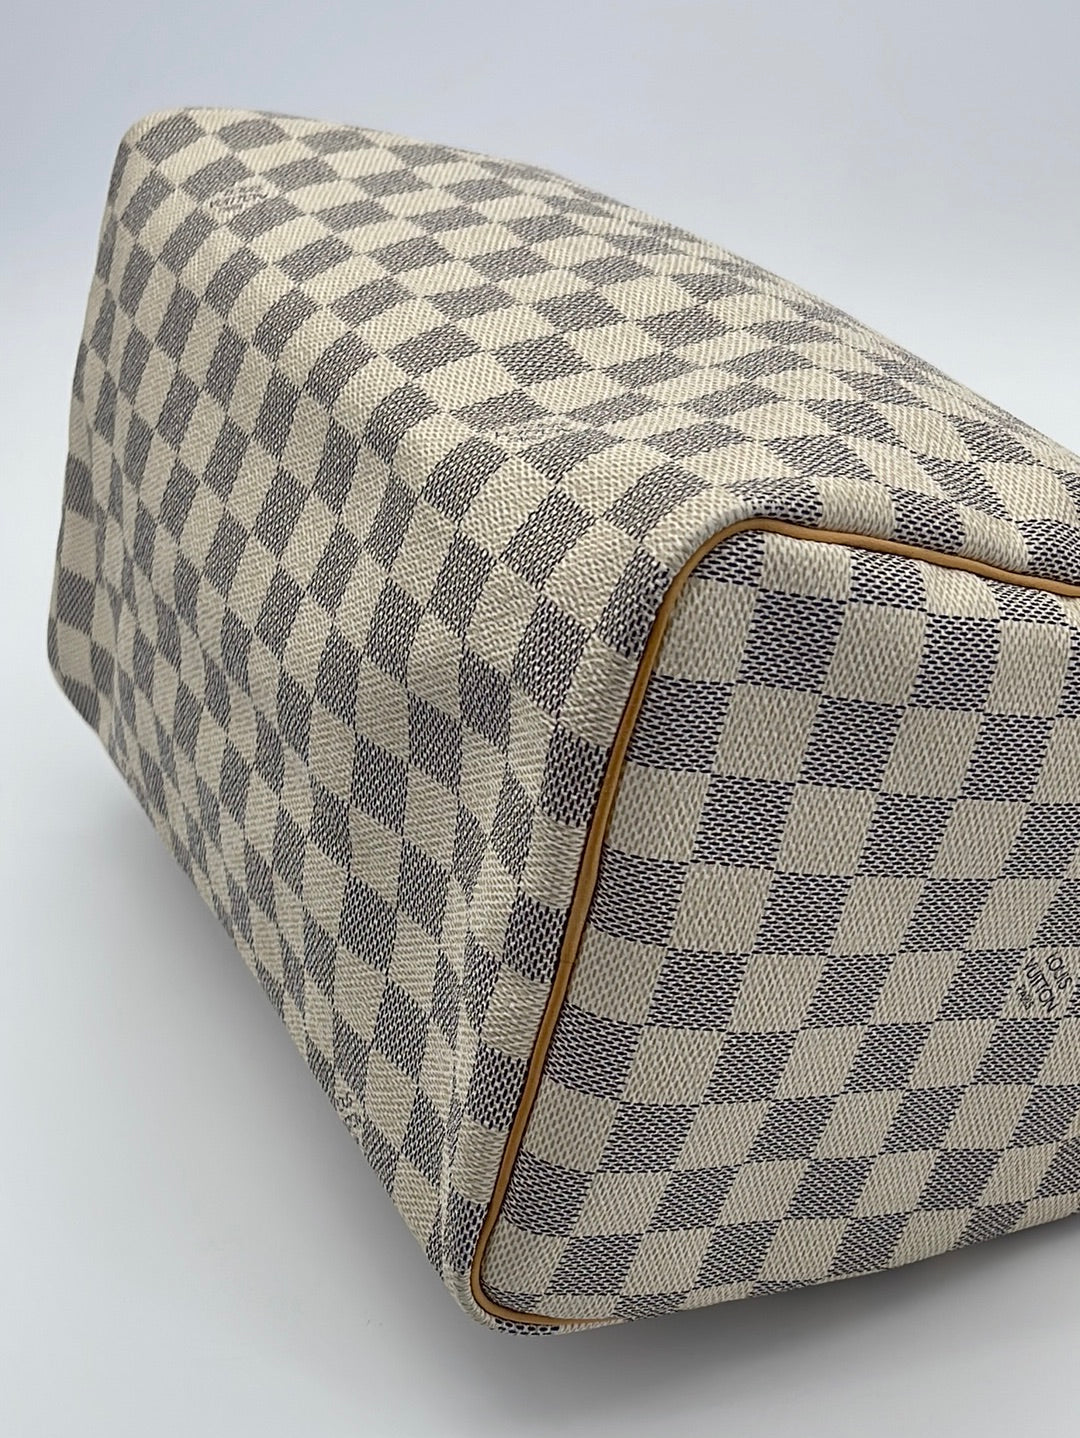 Louis Vuitton Sperone Damier Azur Backpack – Uptown Cheapskate Torrance